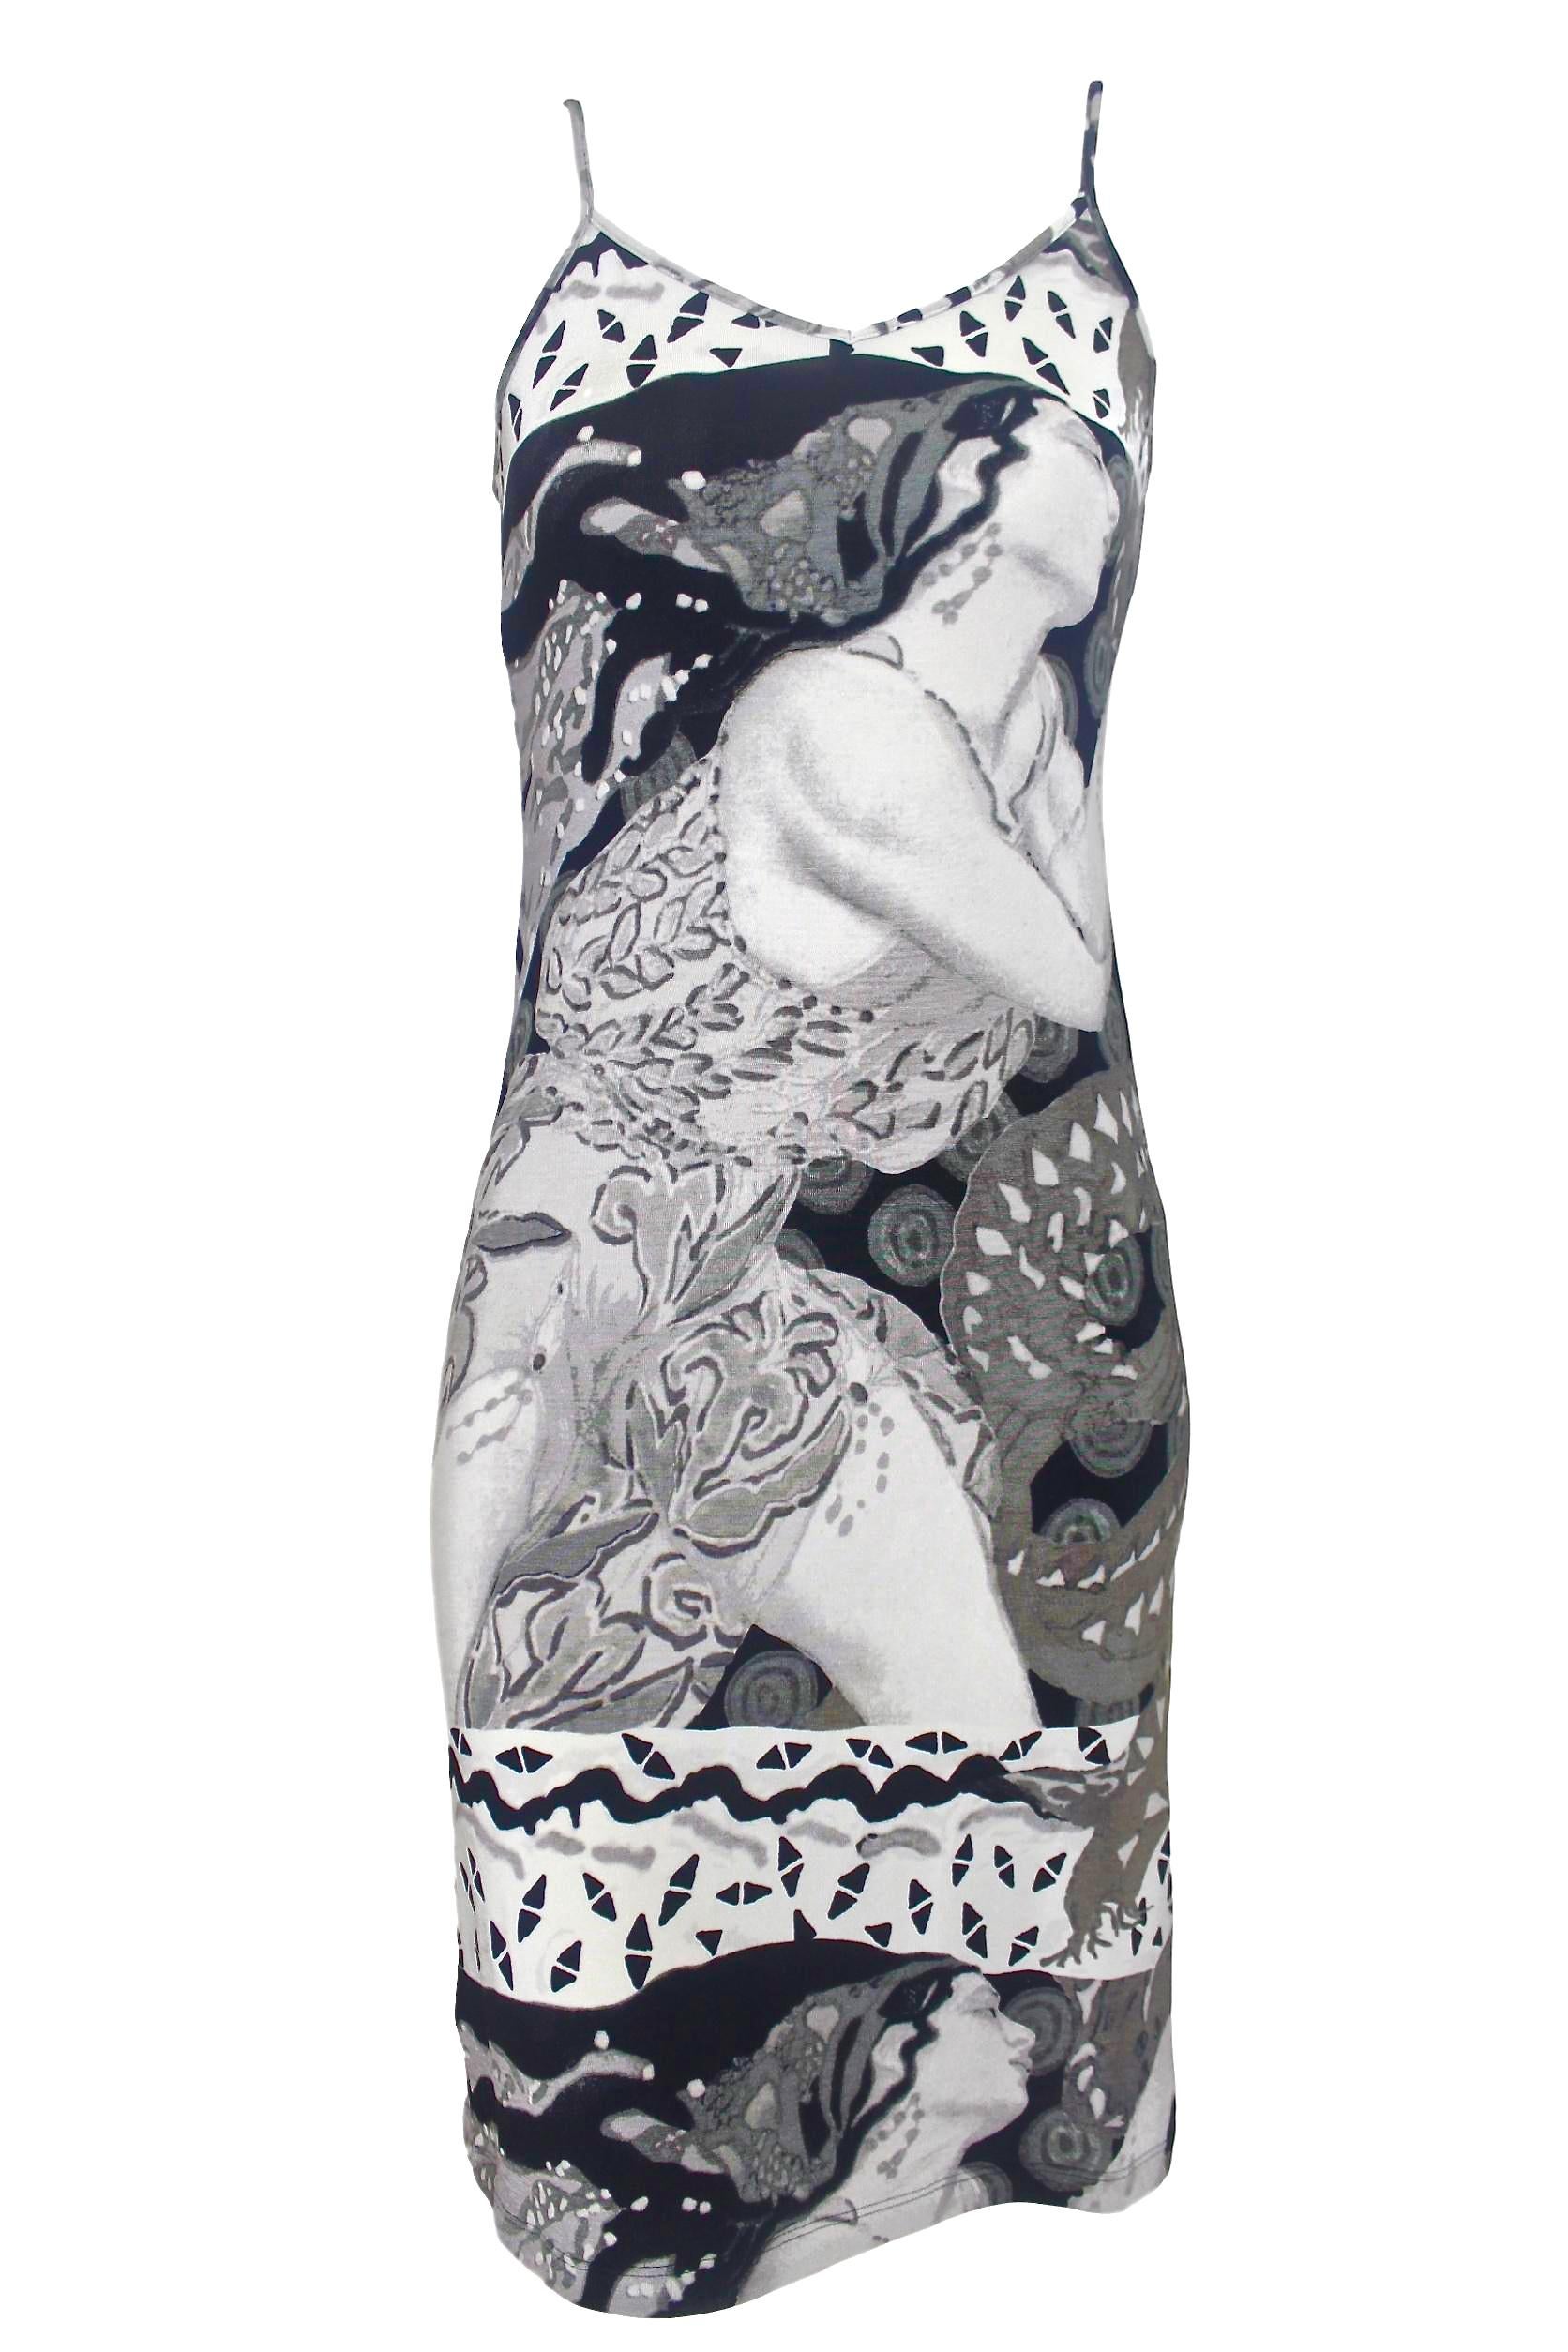 Jean paul Gaultier 'Erte' Print Summer Slip Dress For Sale 5